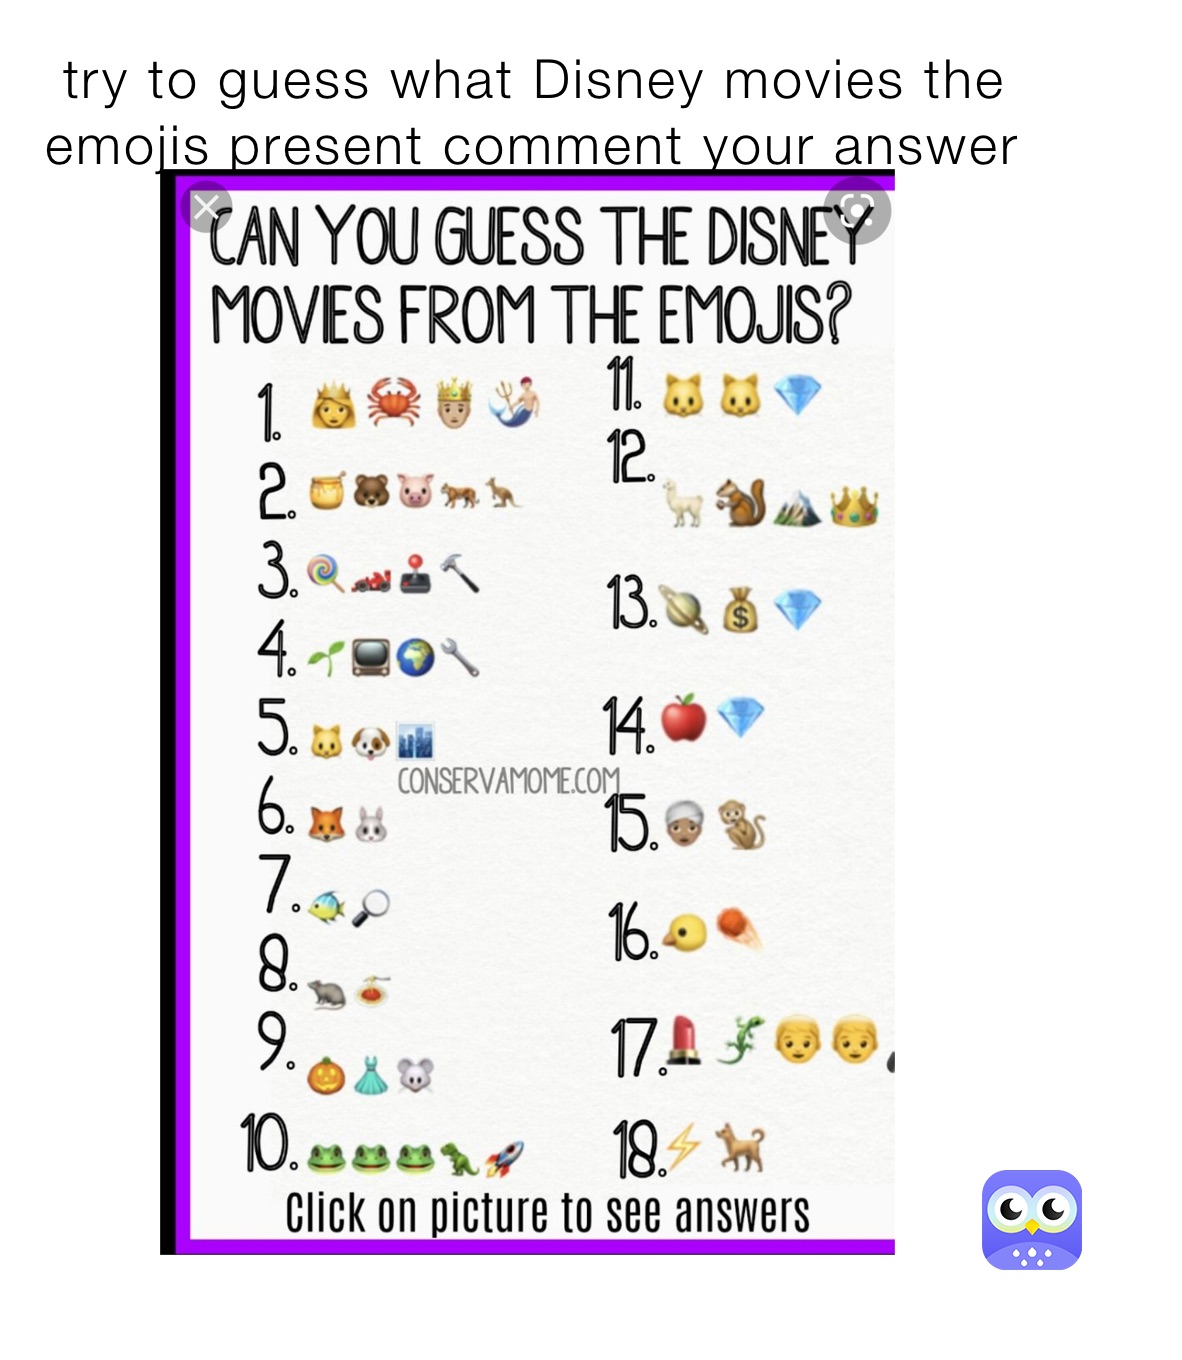 disney movies using emojis only